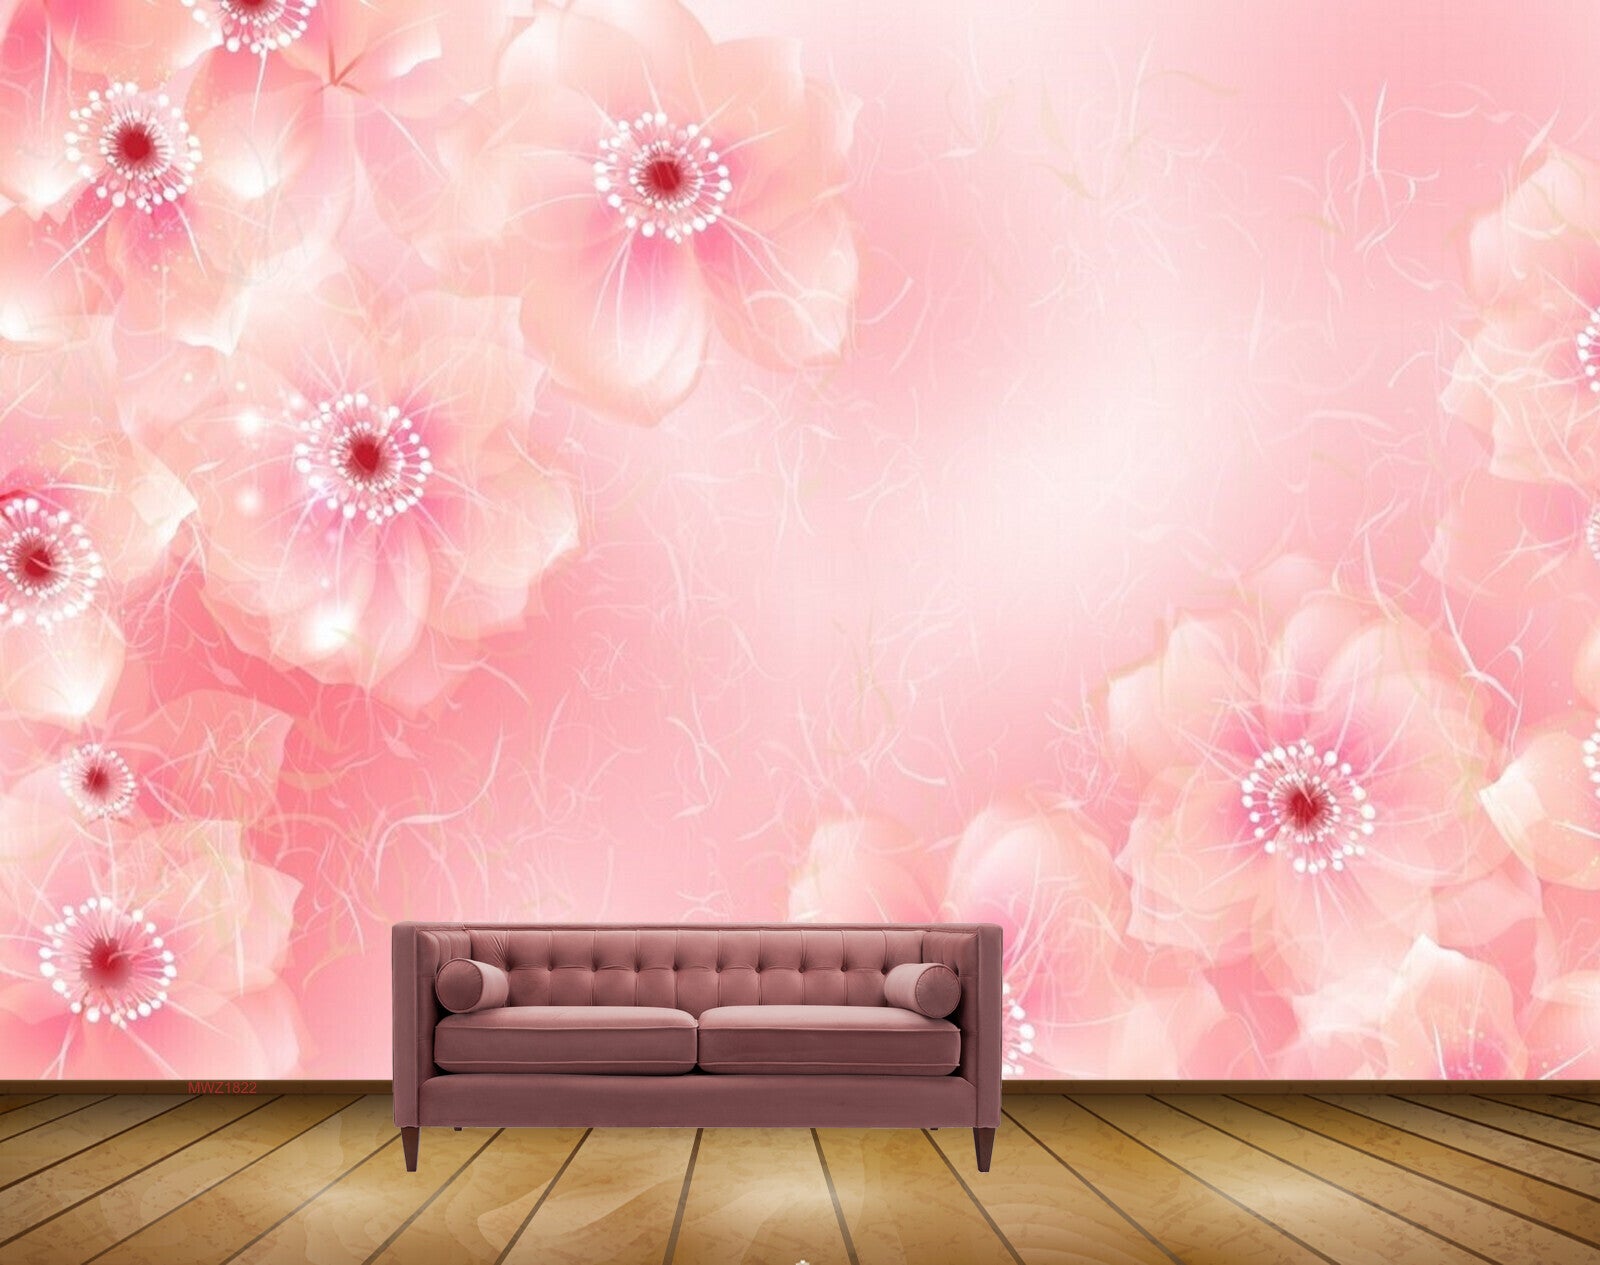 27705 Pink Flower 3d Wallpaper Images Stock Photos  Vectors   Shutterstock